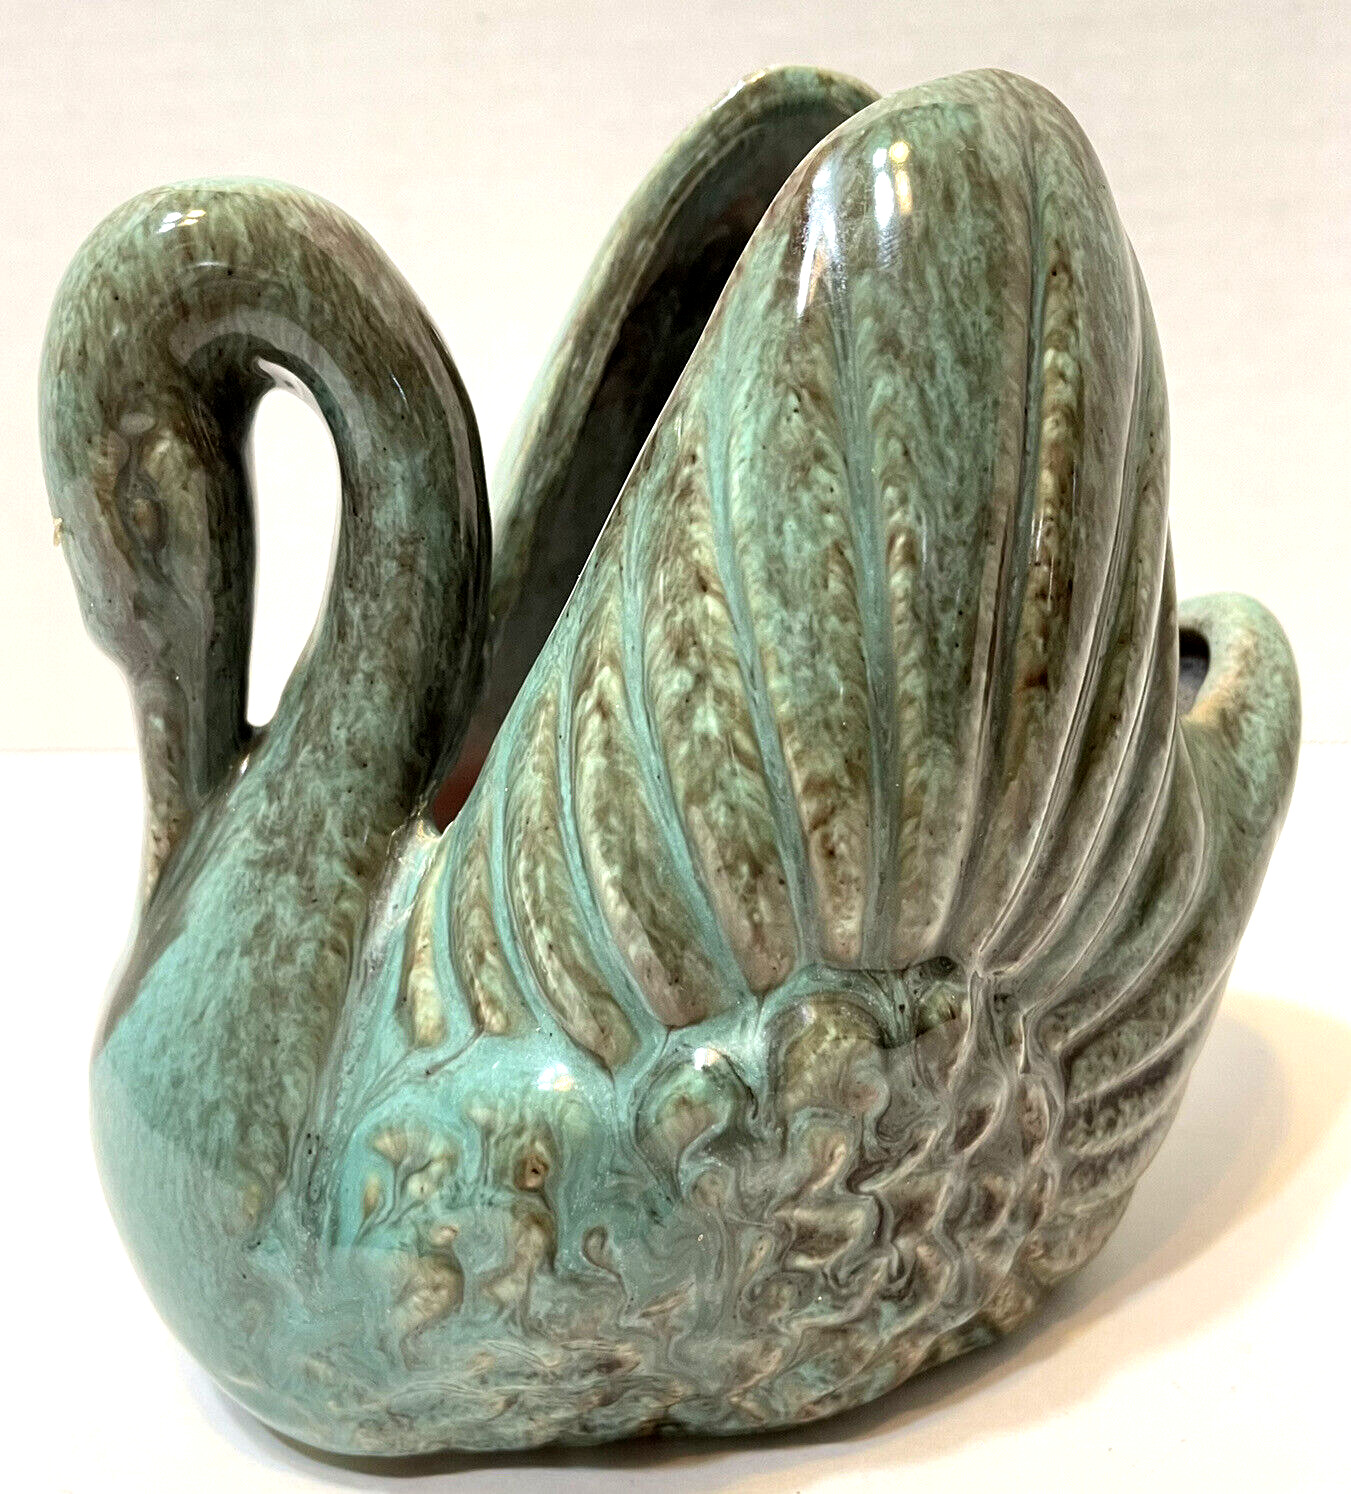 Vintage Gonder USA Pottery Swan Planter Vase E 44 Signed Teal Blue 5 x 5 inches